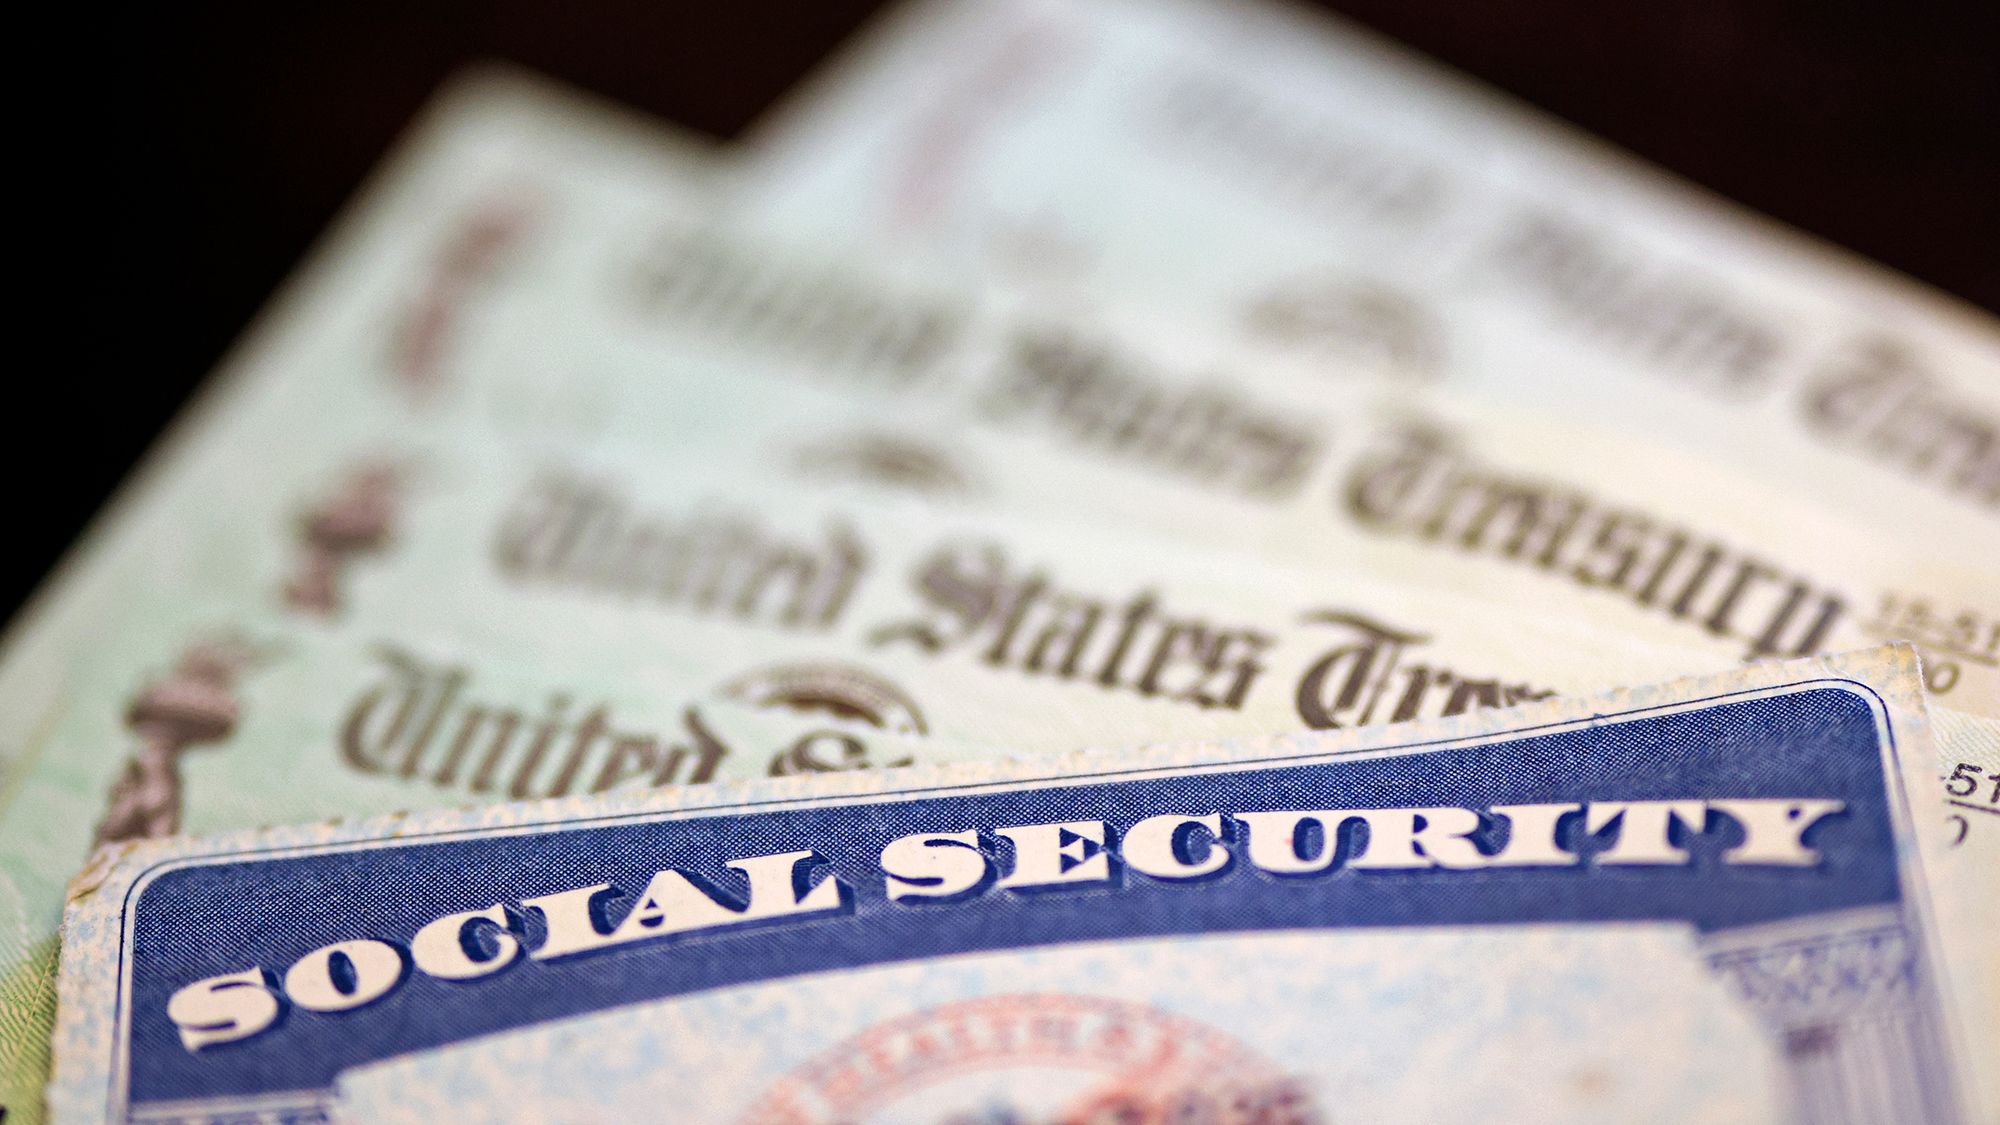 Social security cards...